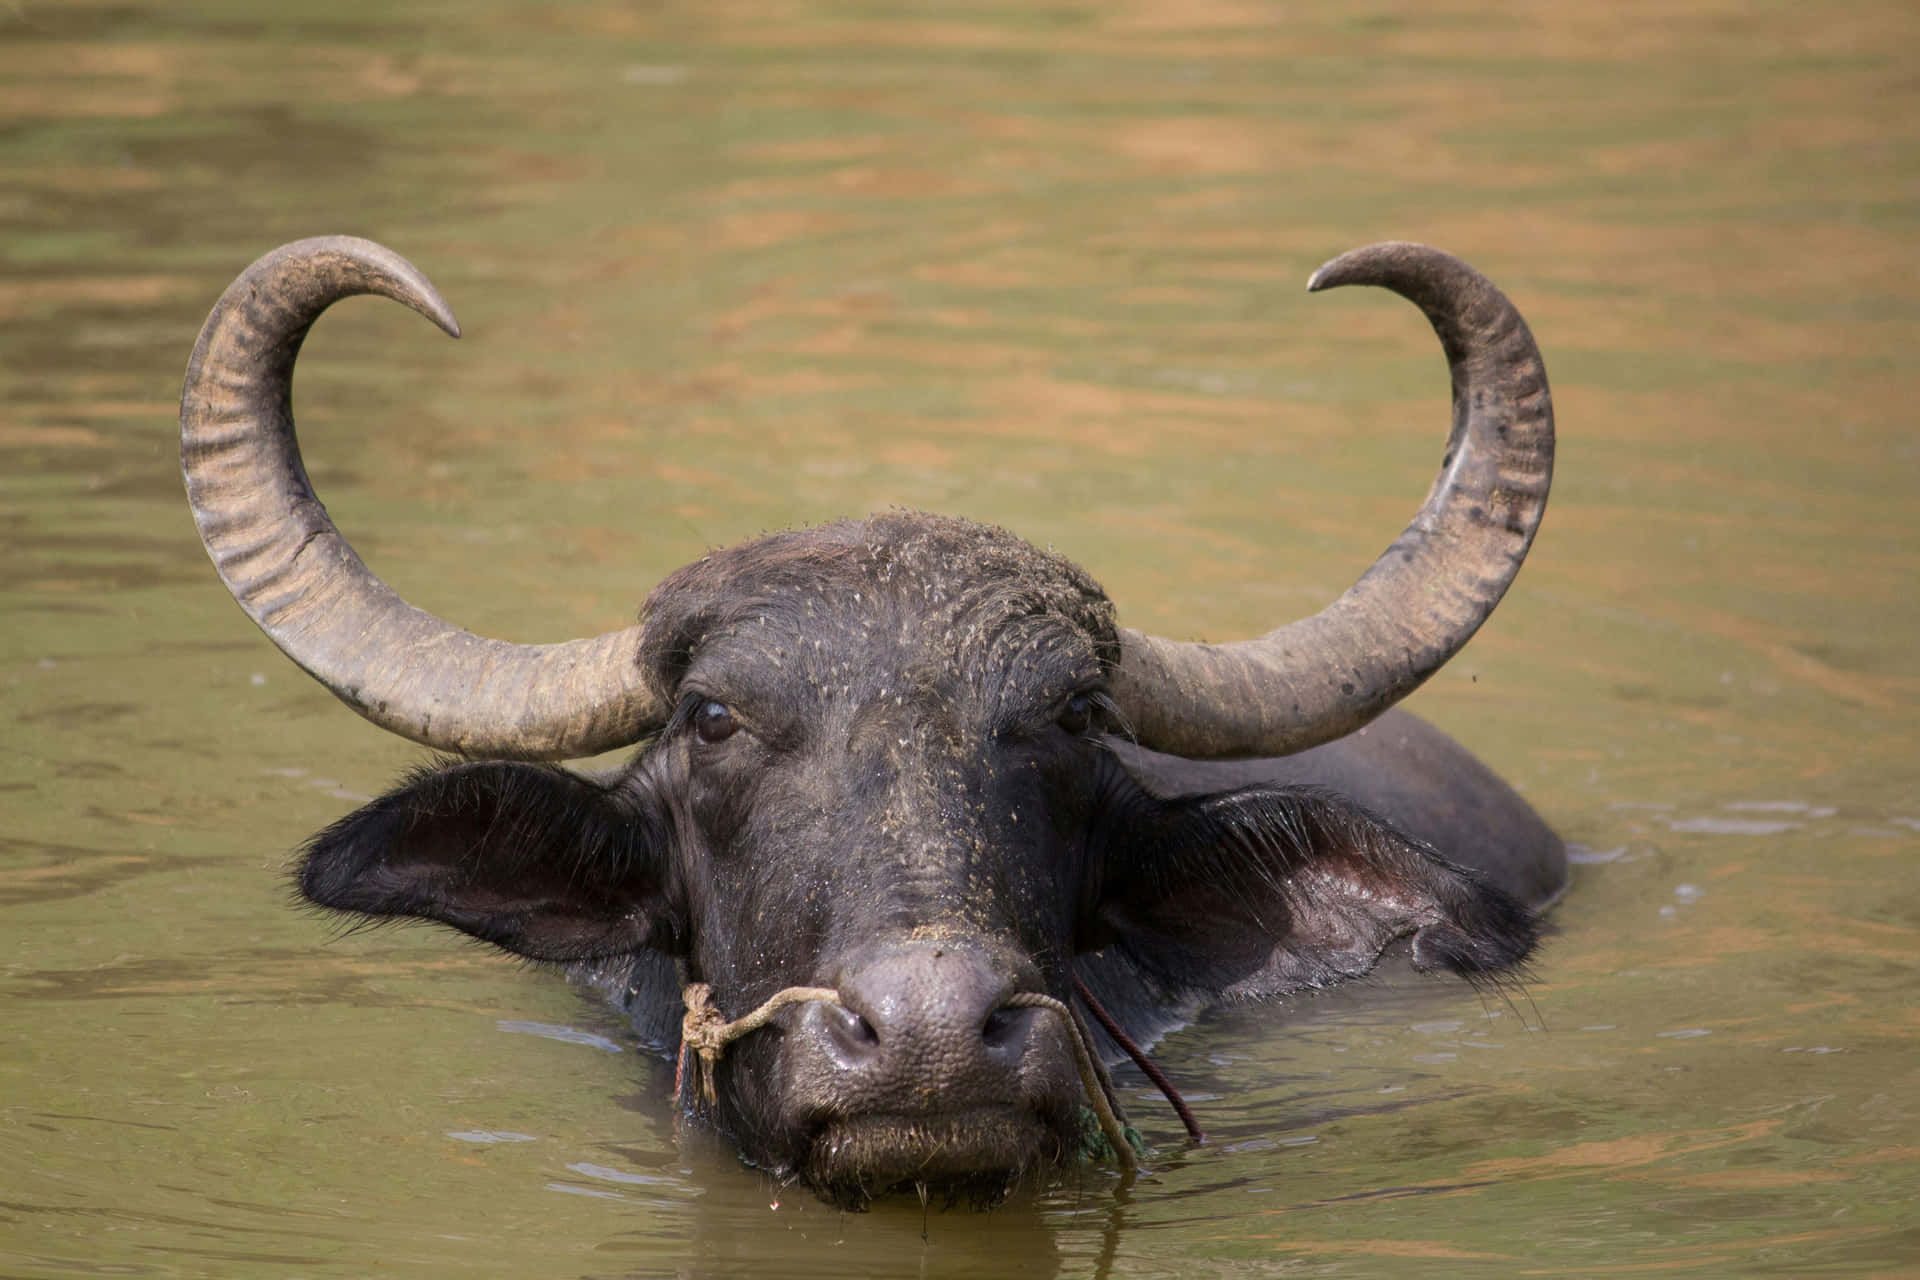 Water Buffalo Cooling Offin Water Wallpaper